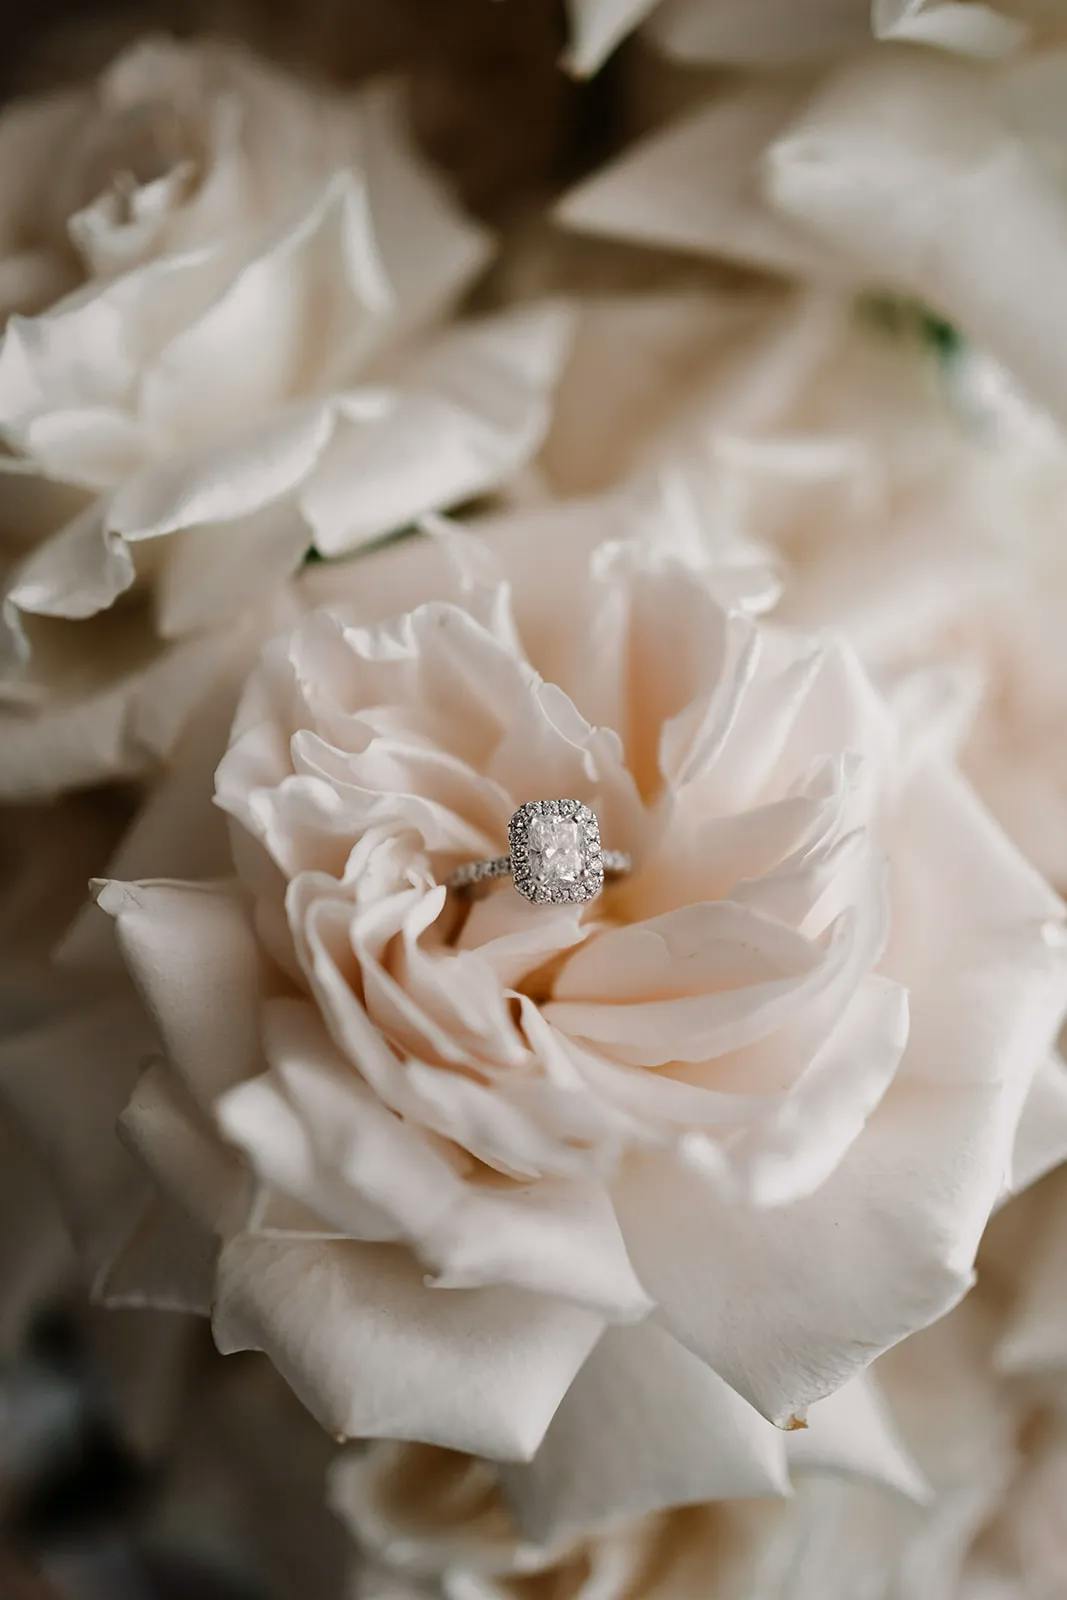 Wedding ring in flowers